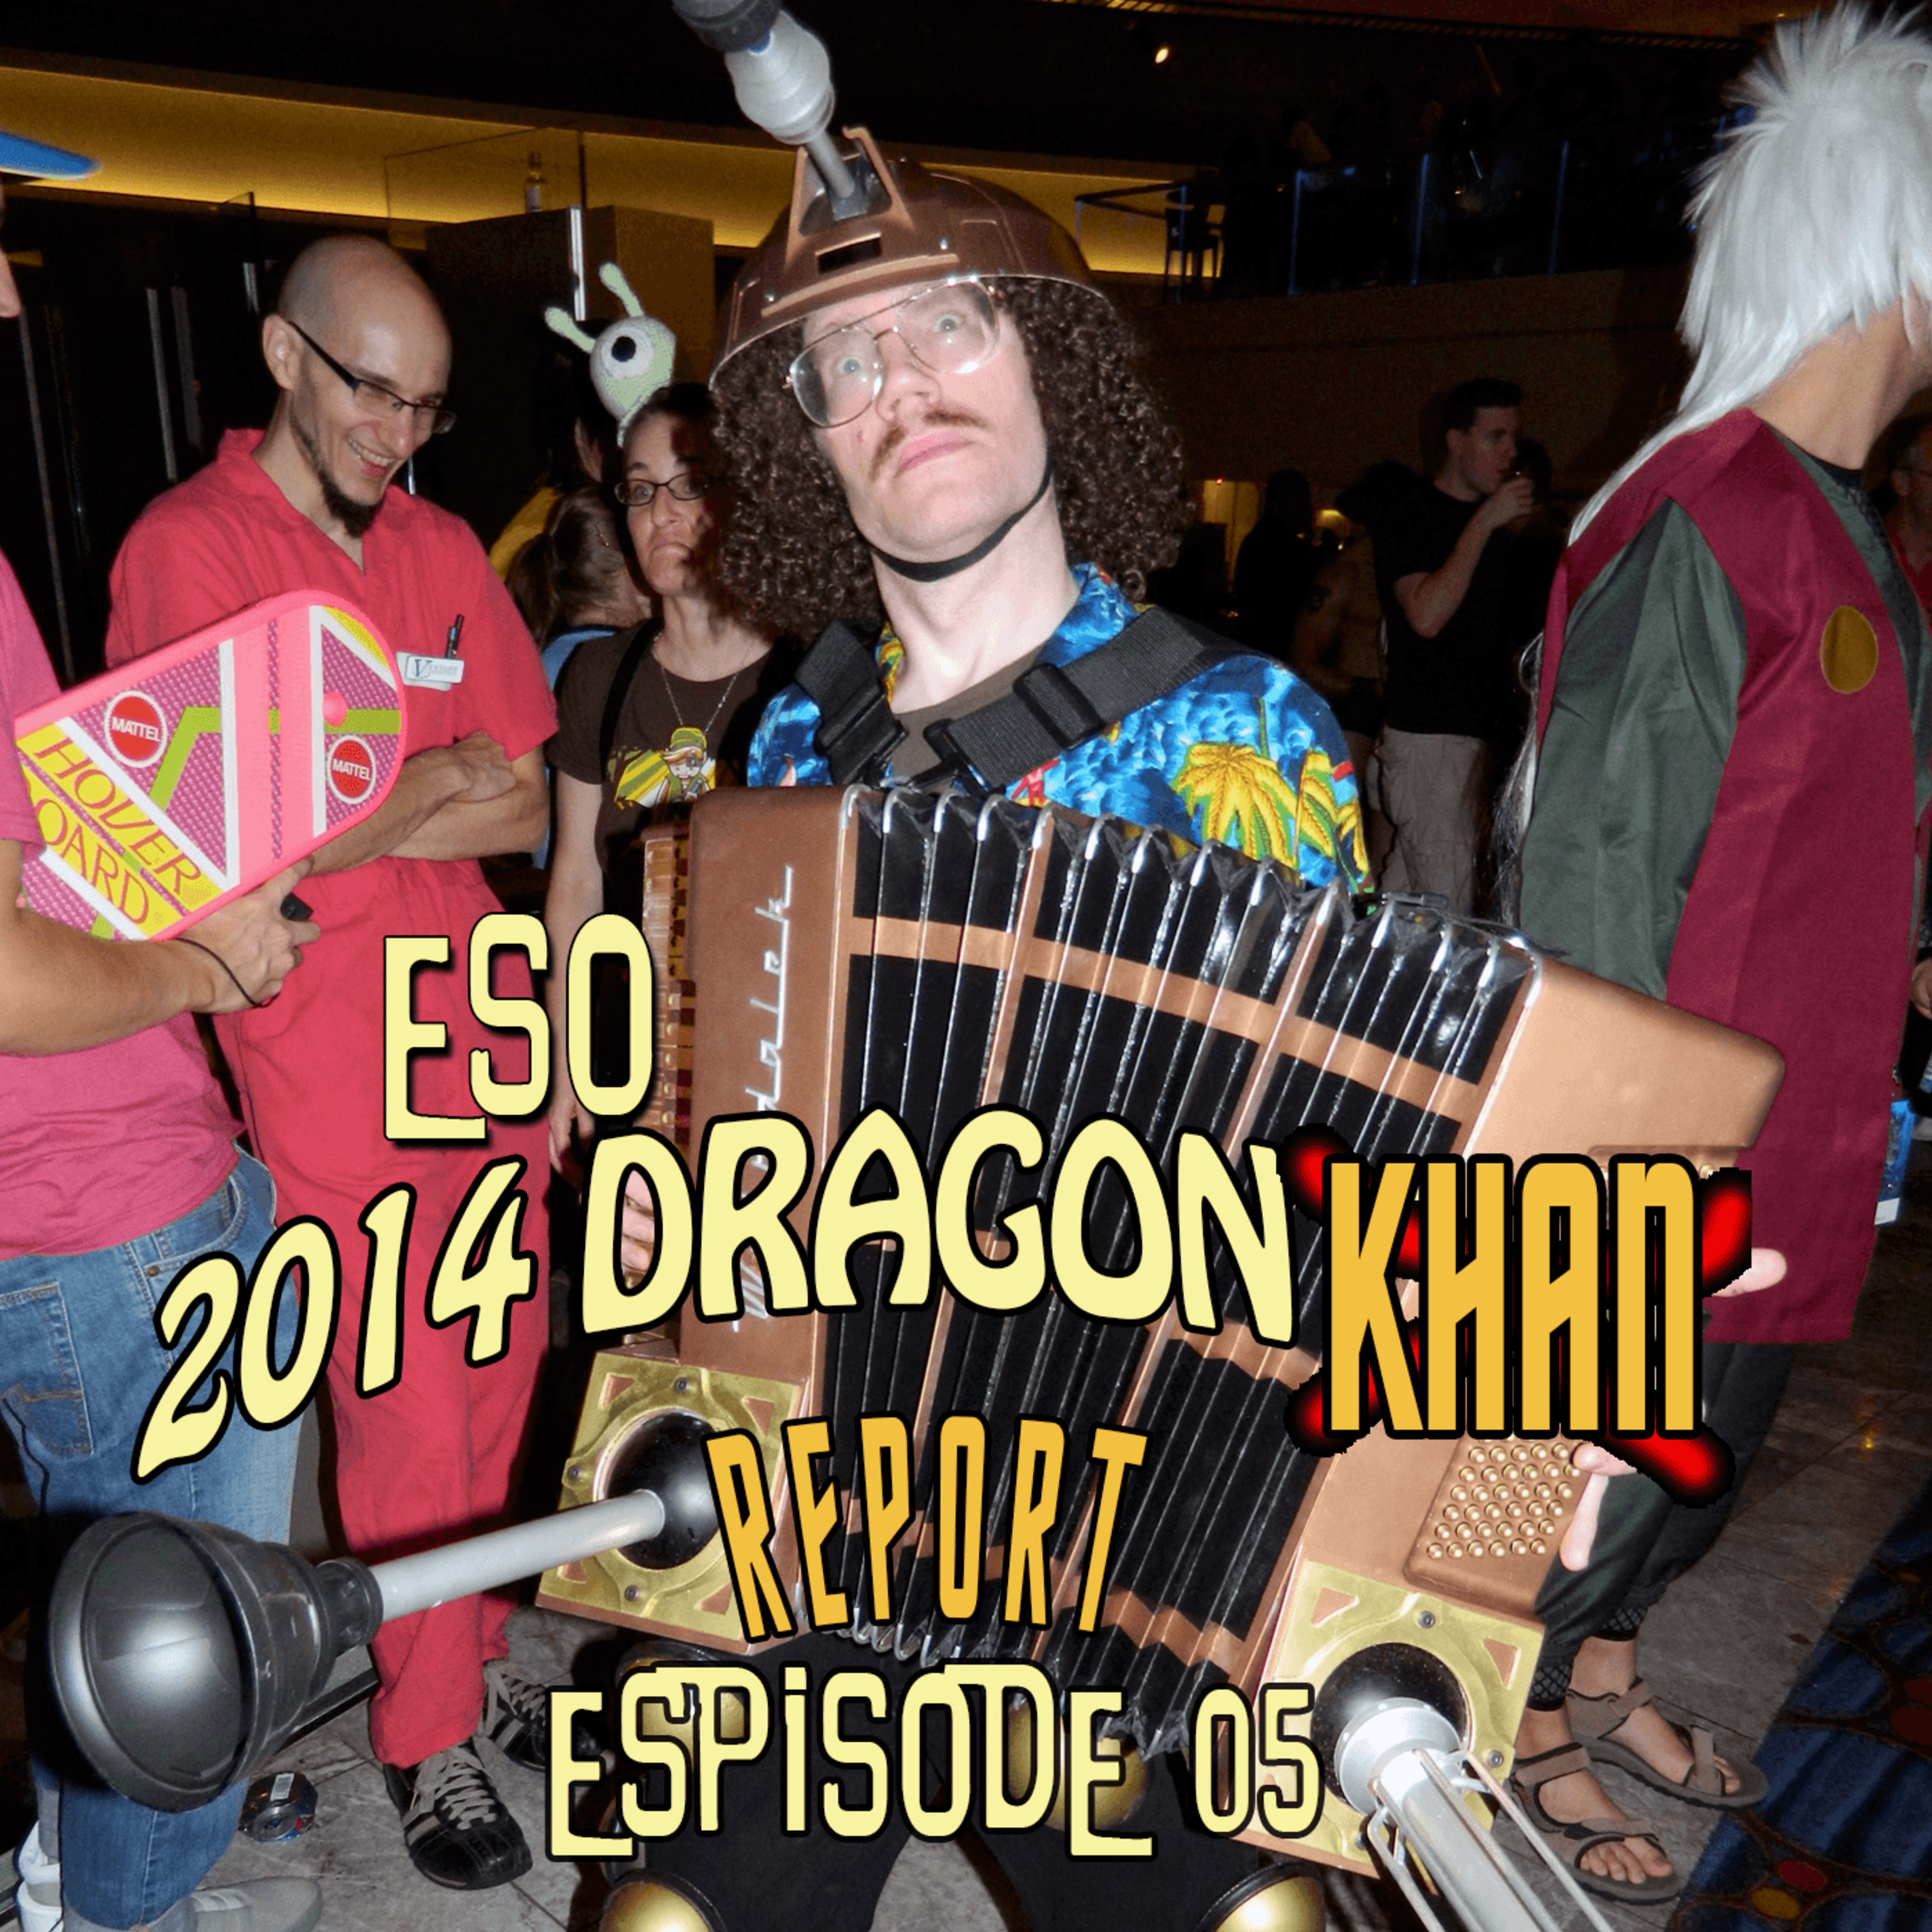 The ESO 2014 DragonCon Khan Report Episode 5